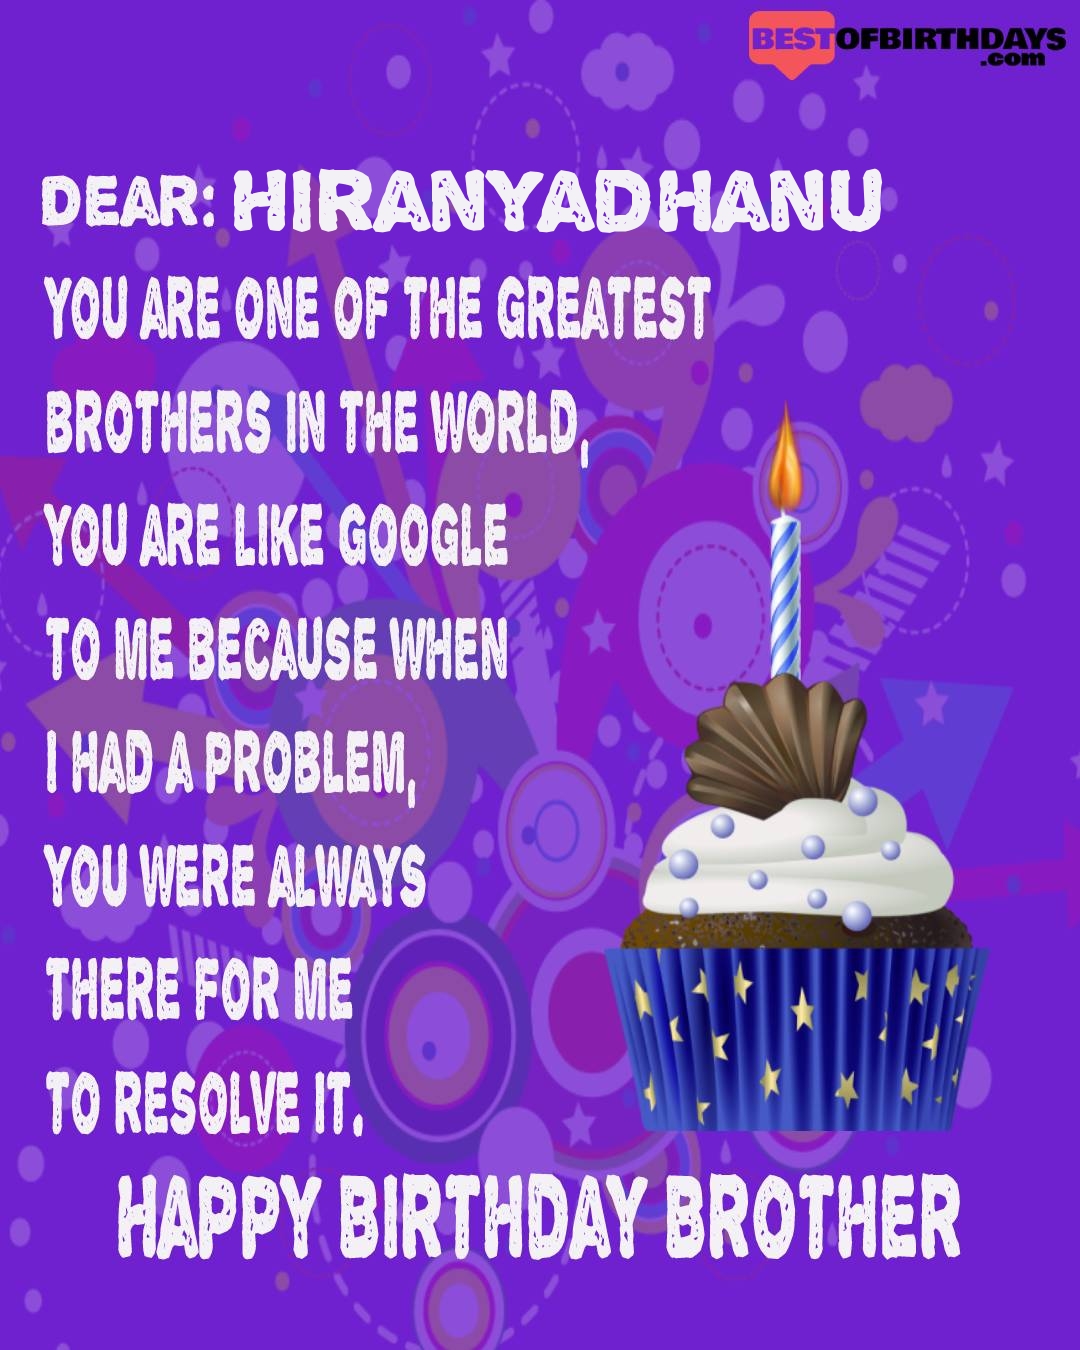 Happy birthday hiranyadhanu bhai brother bro